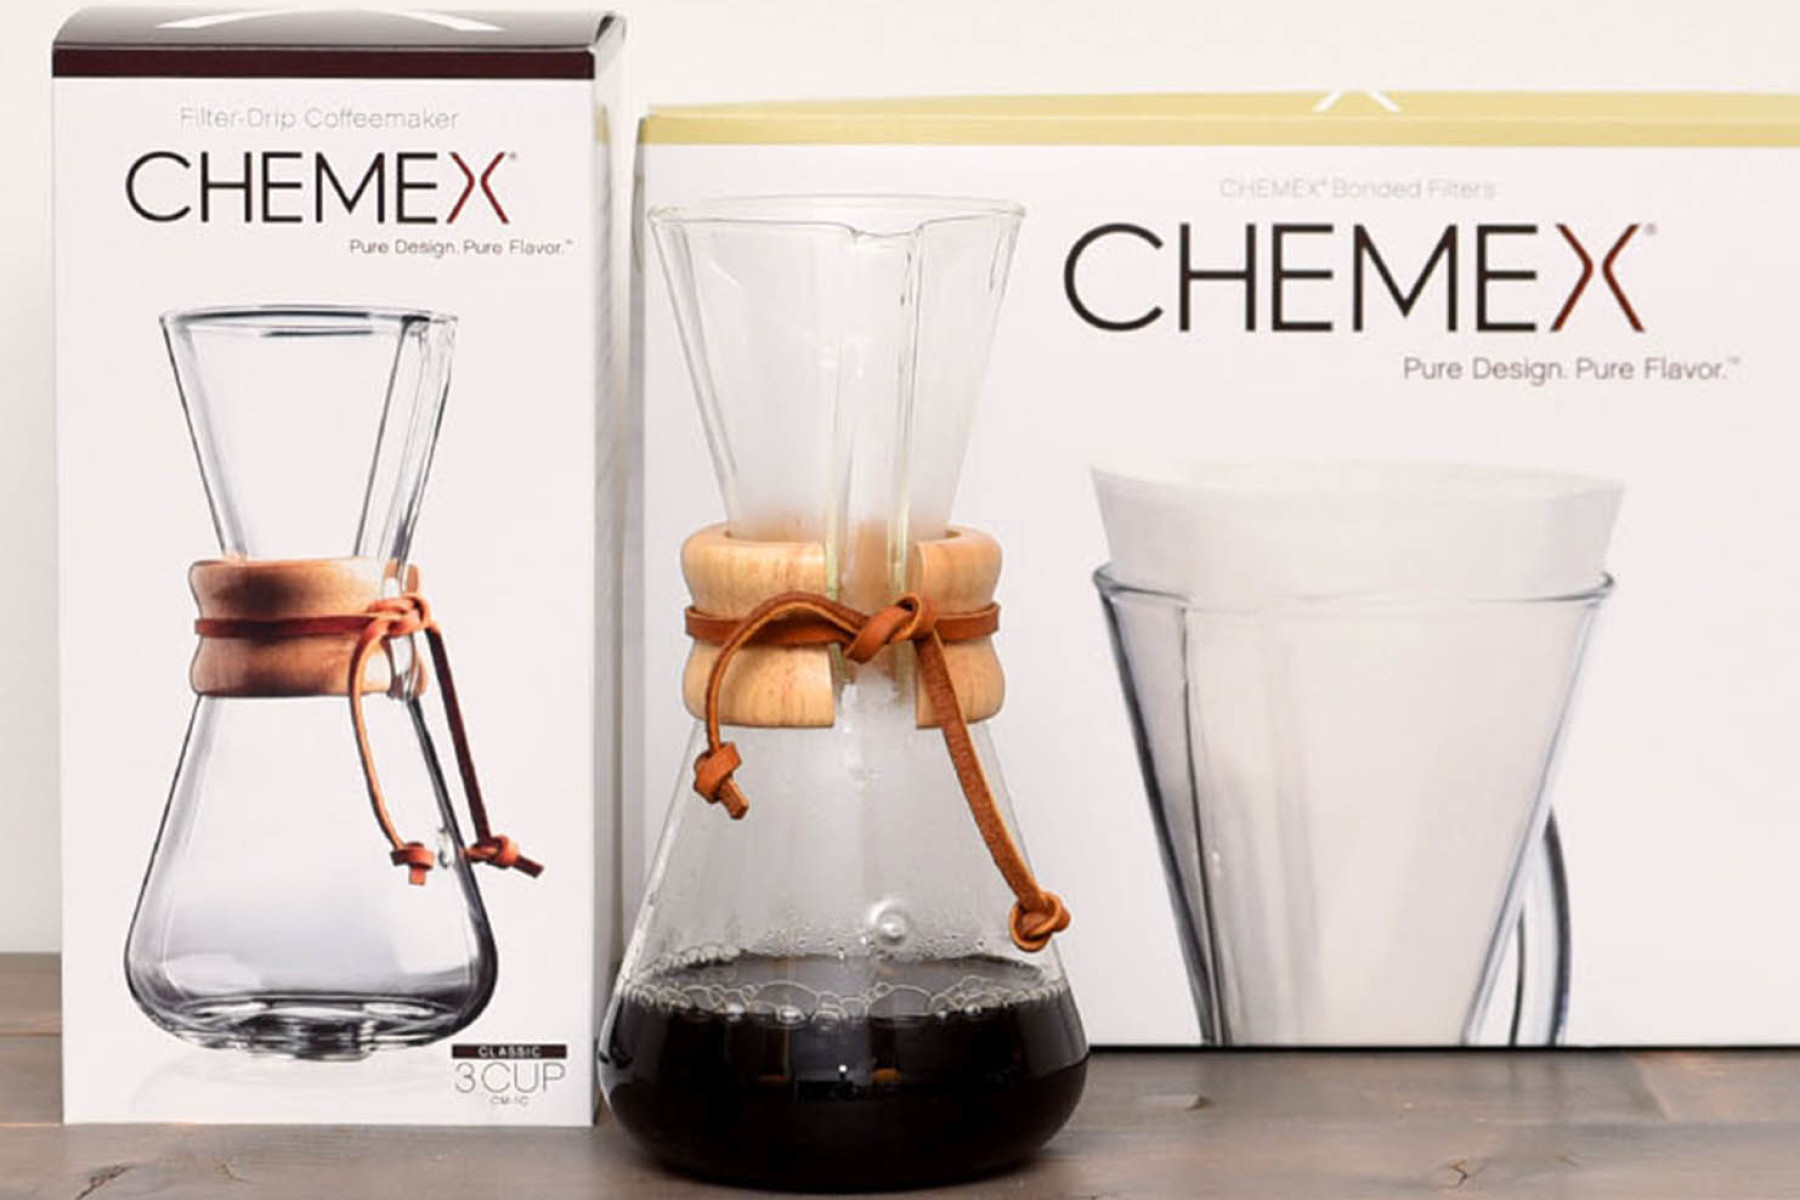 Chemex coffee gadget + 250g specialty coffee beans